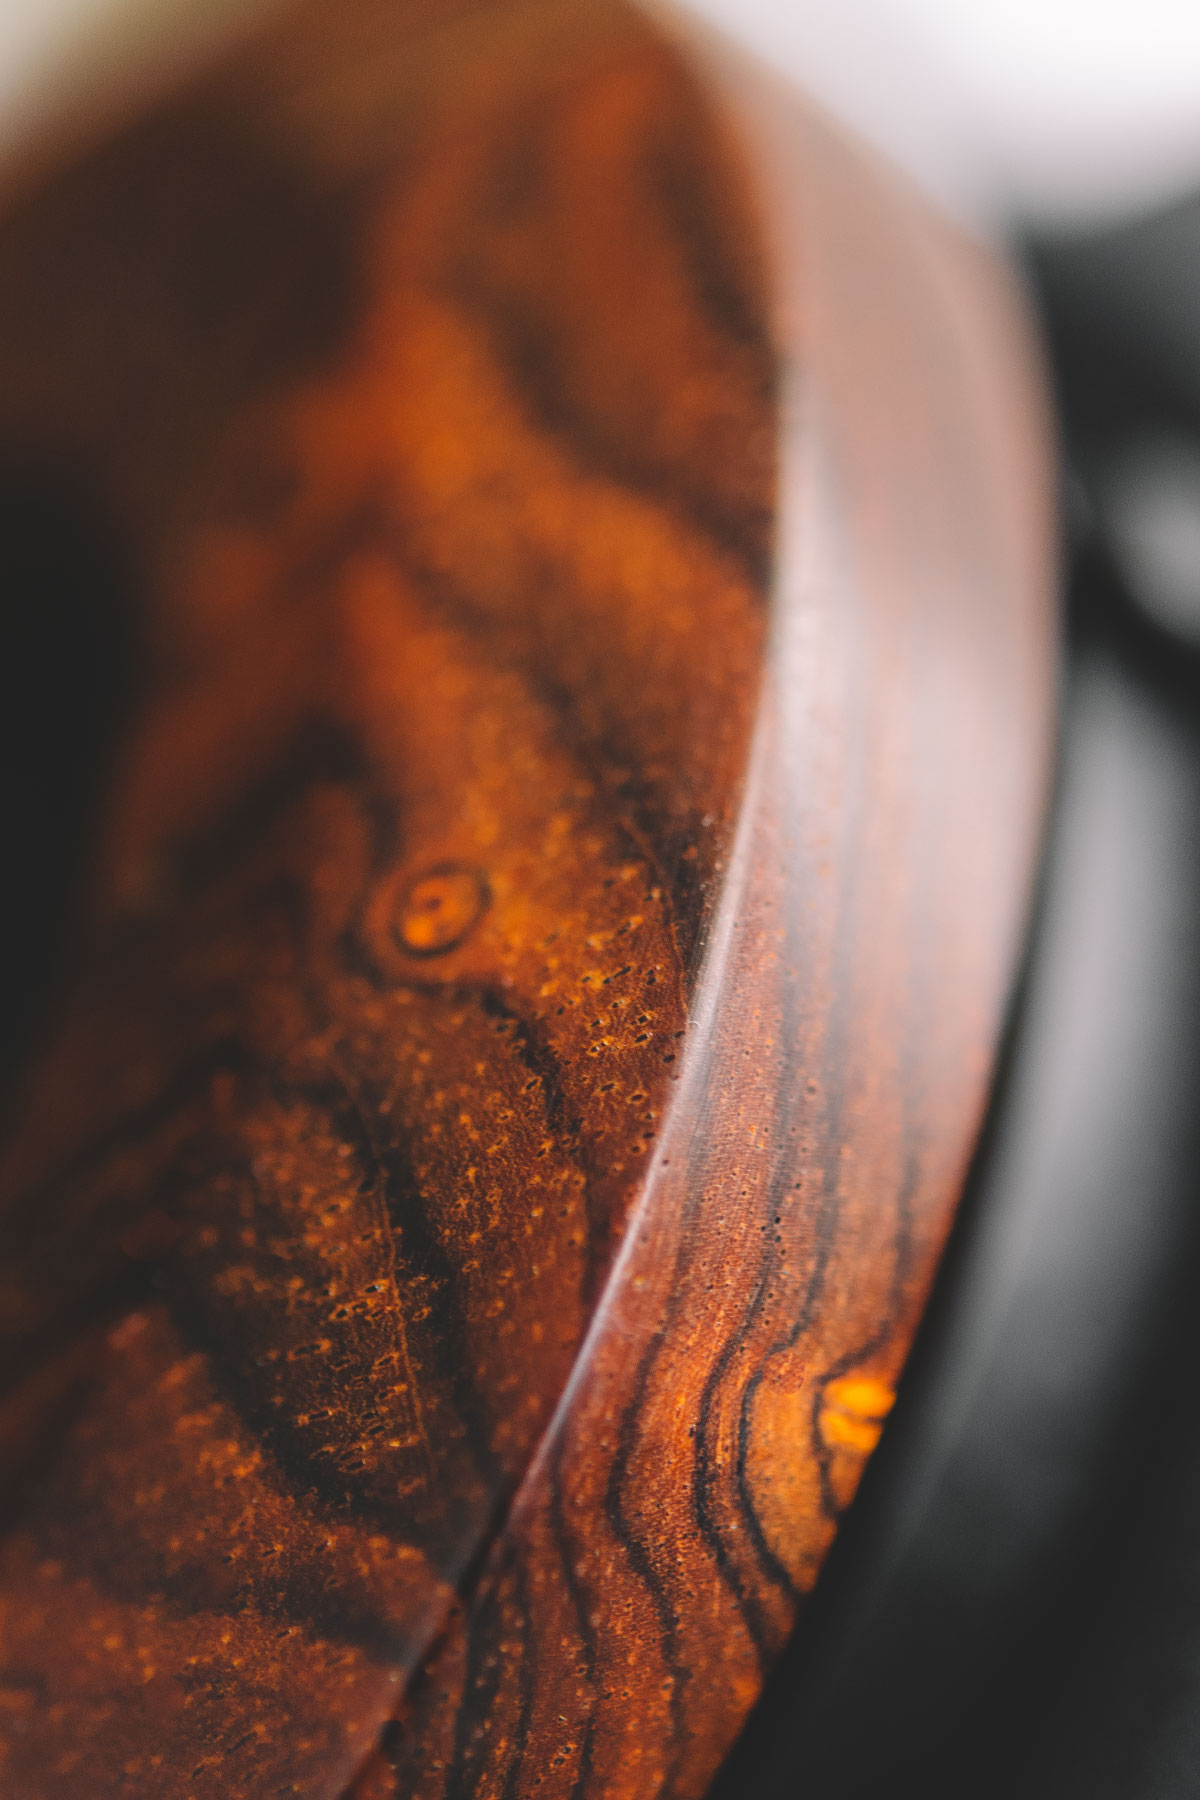 Closeup photo of wooden edge of gs3000e headphones